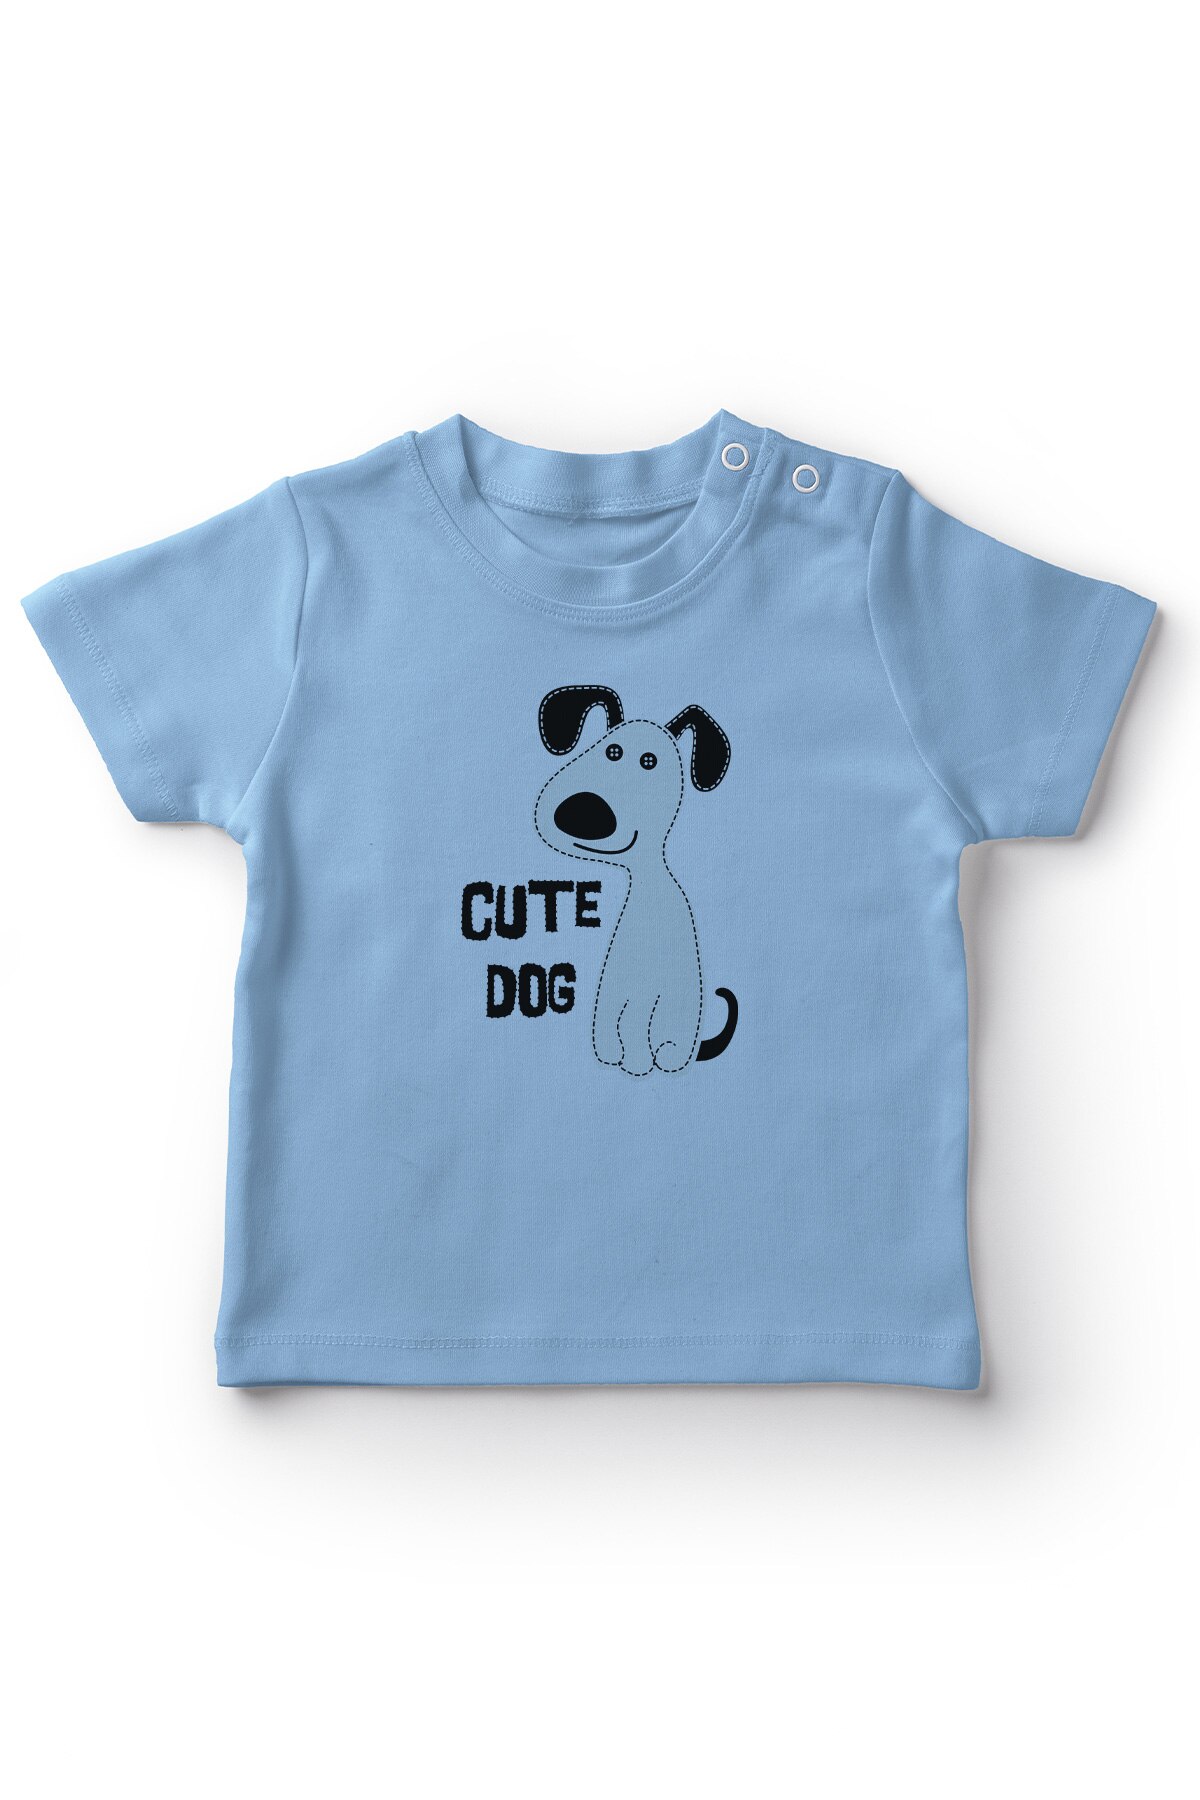 Angemiel baby sød hund baby dreng t-shirt blå